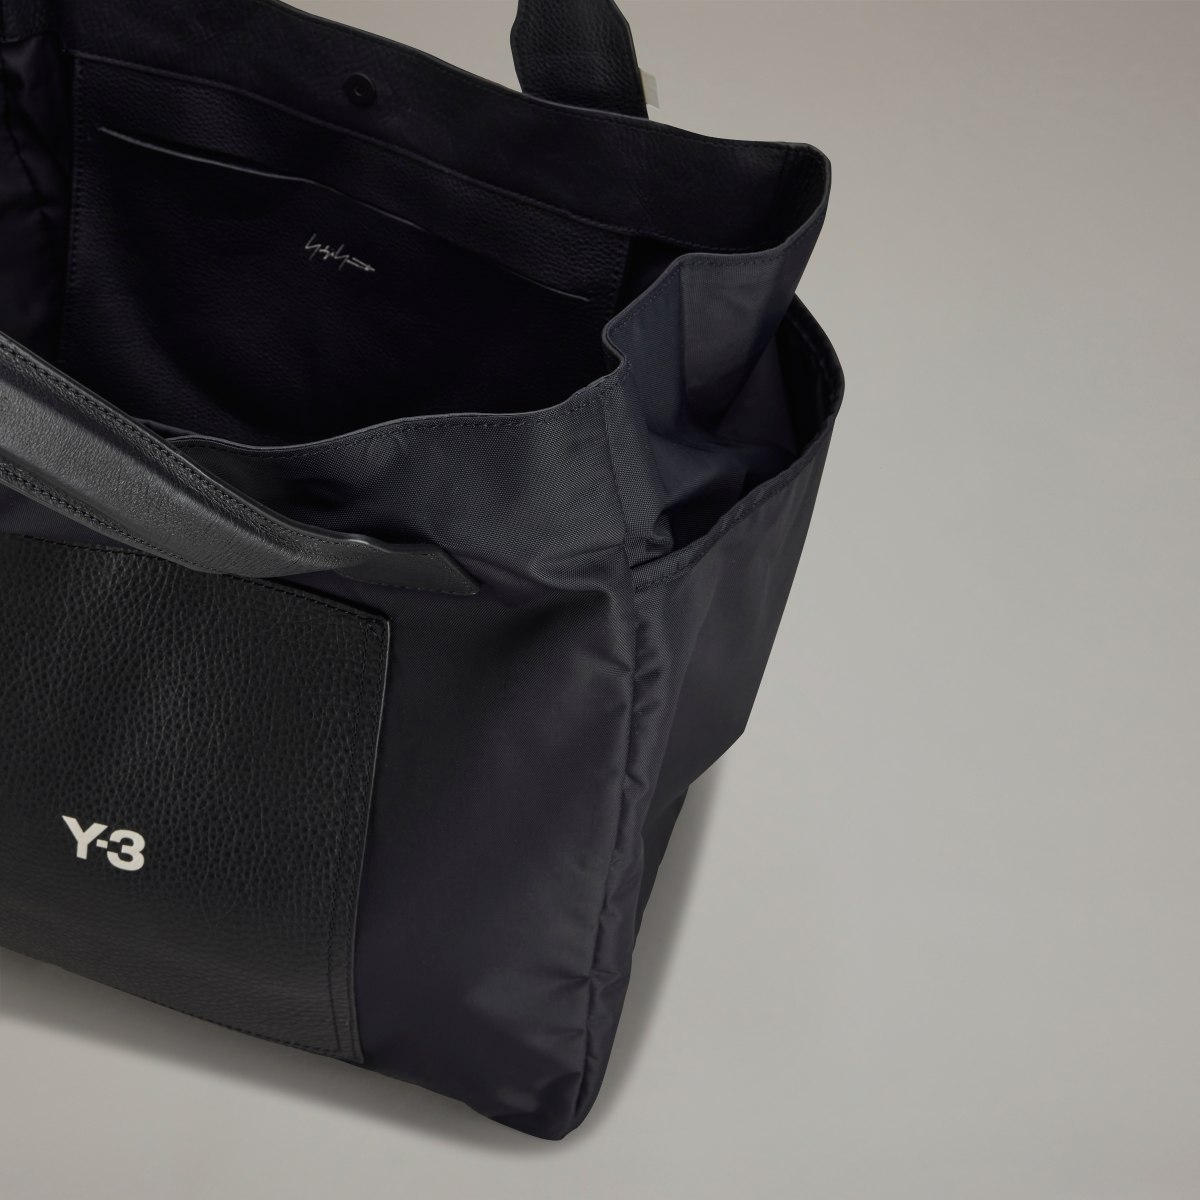 Adidas Y-3 Lux Bag. 5